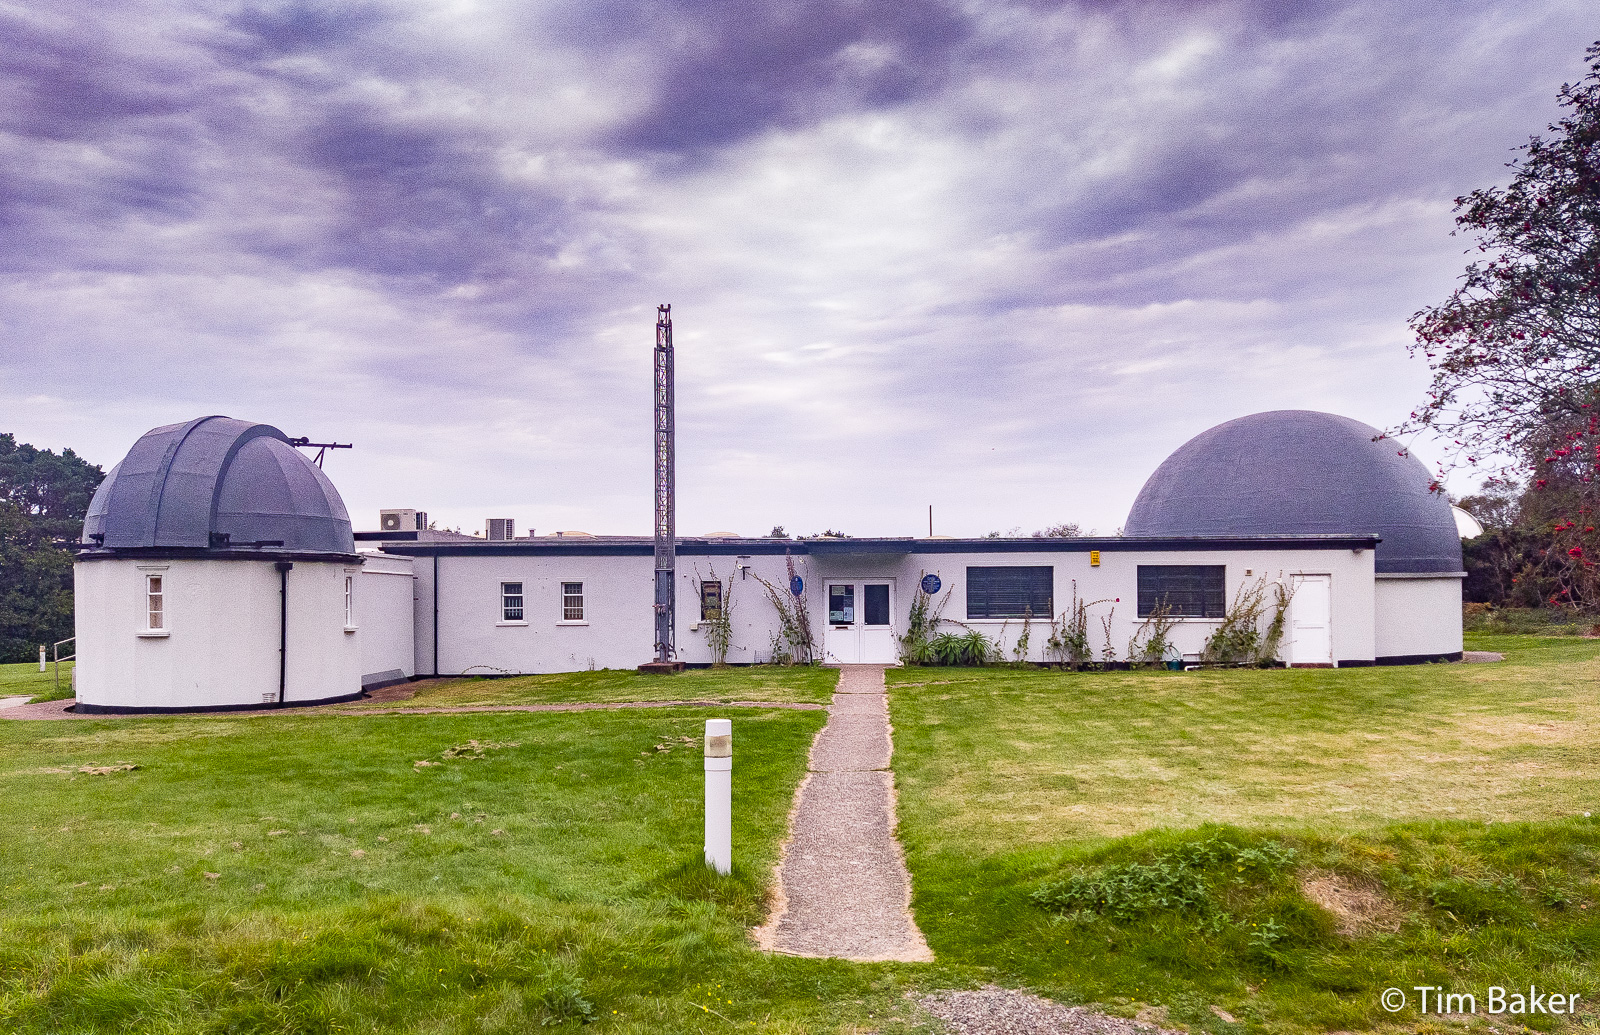 Norman Lockyer Observatory, Quatermass not shown.